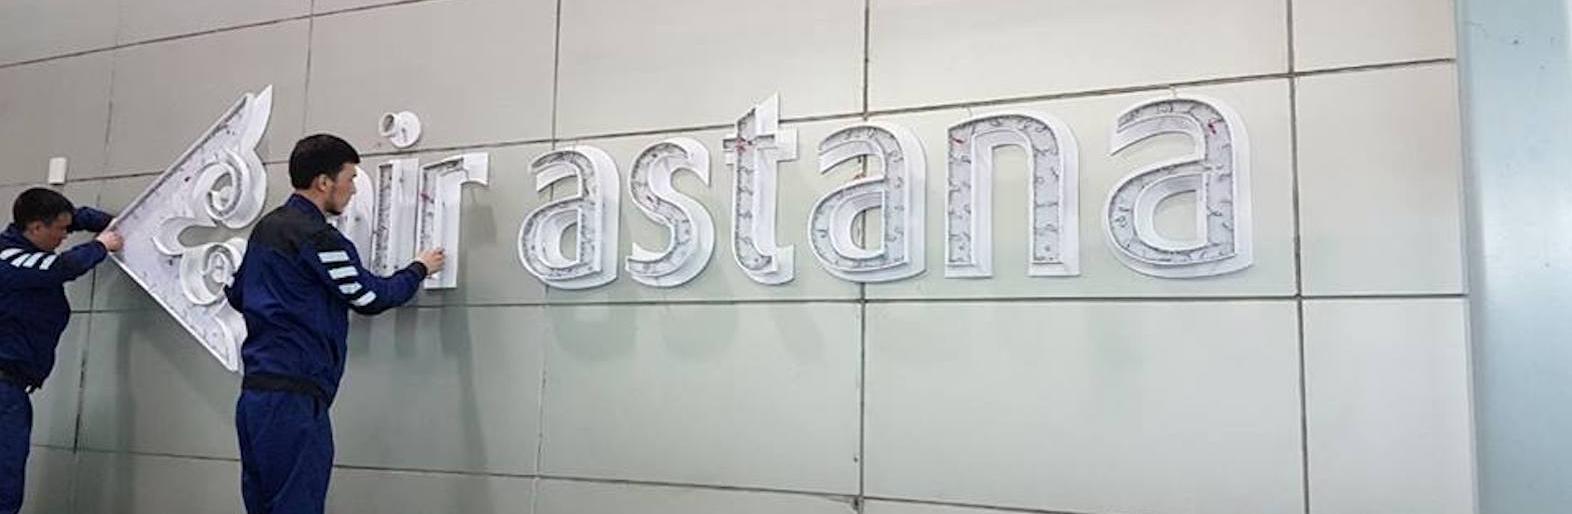      Air Astana